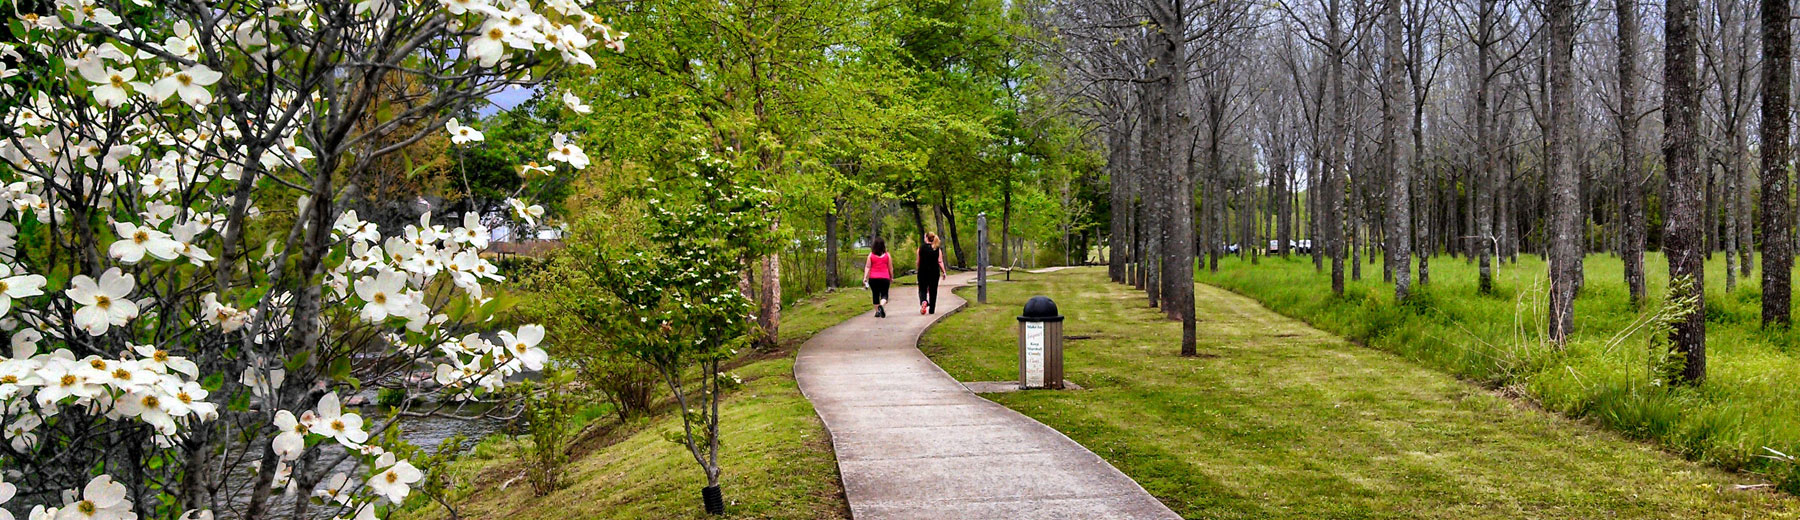 Women walking a park trail